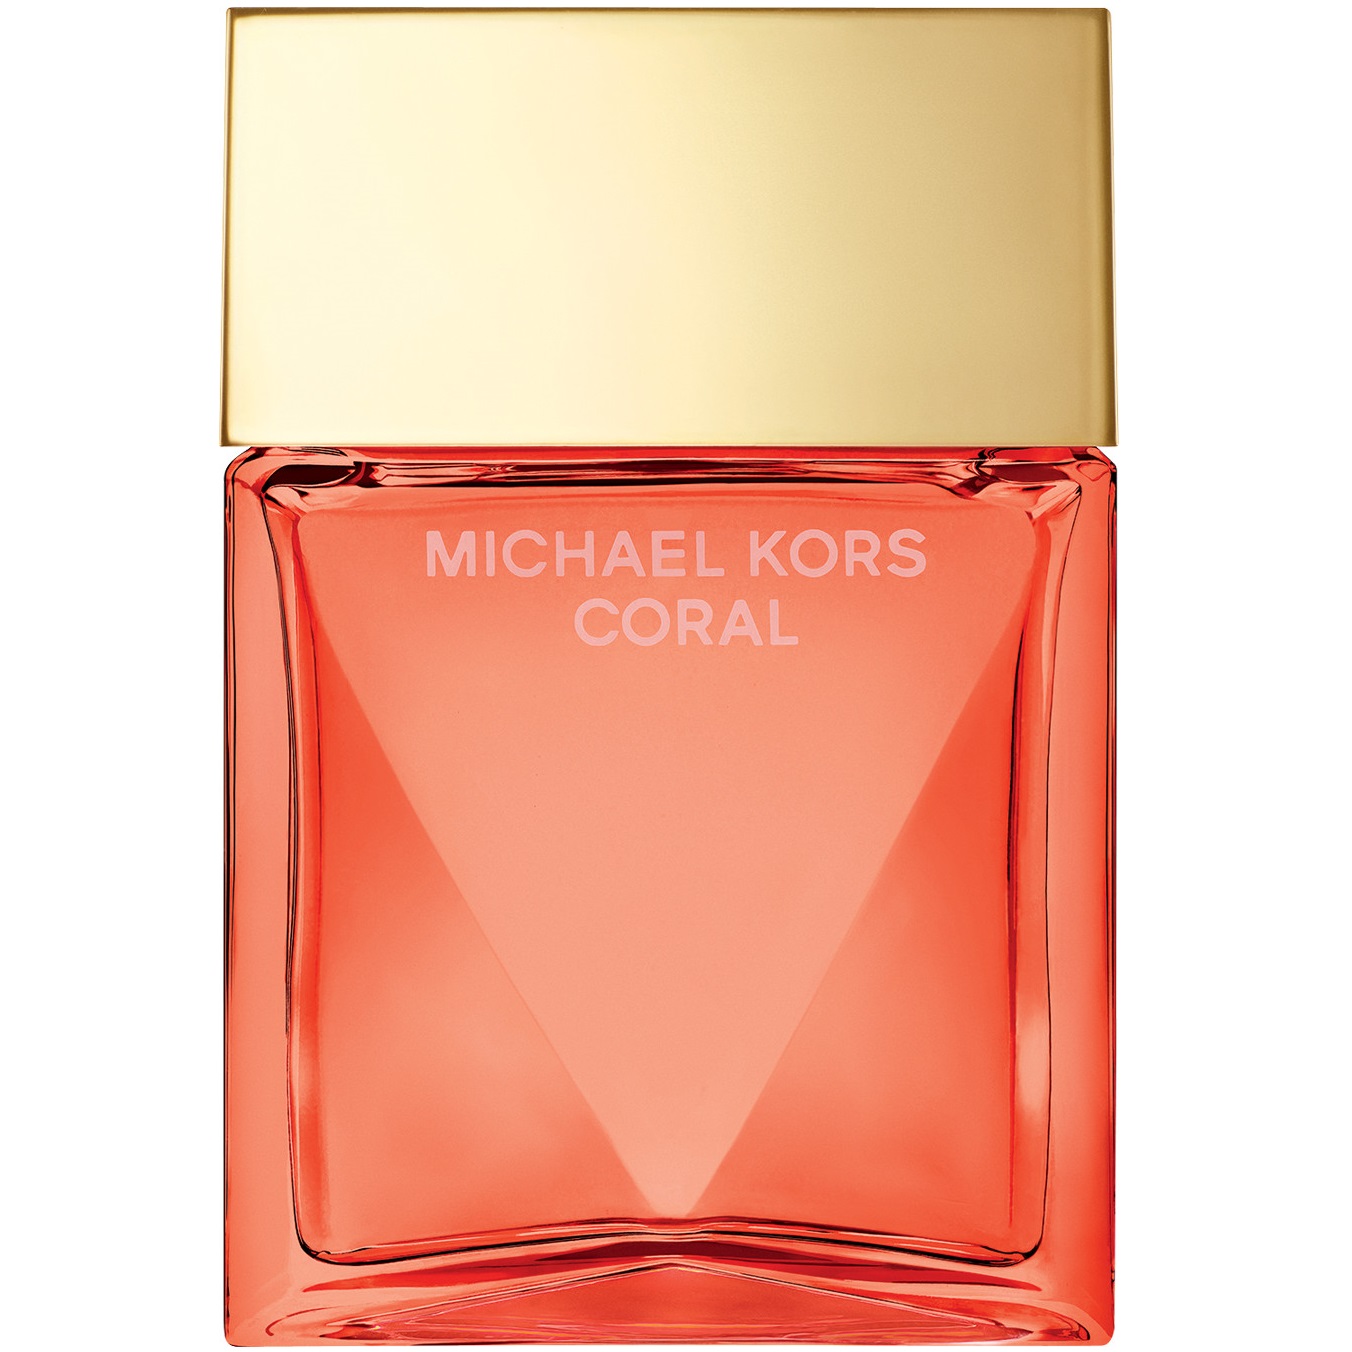 Michael Kors - Coral (2мл)